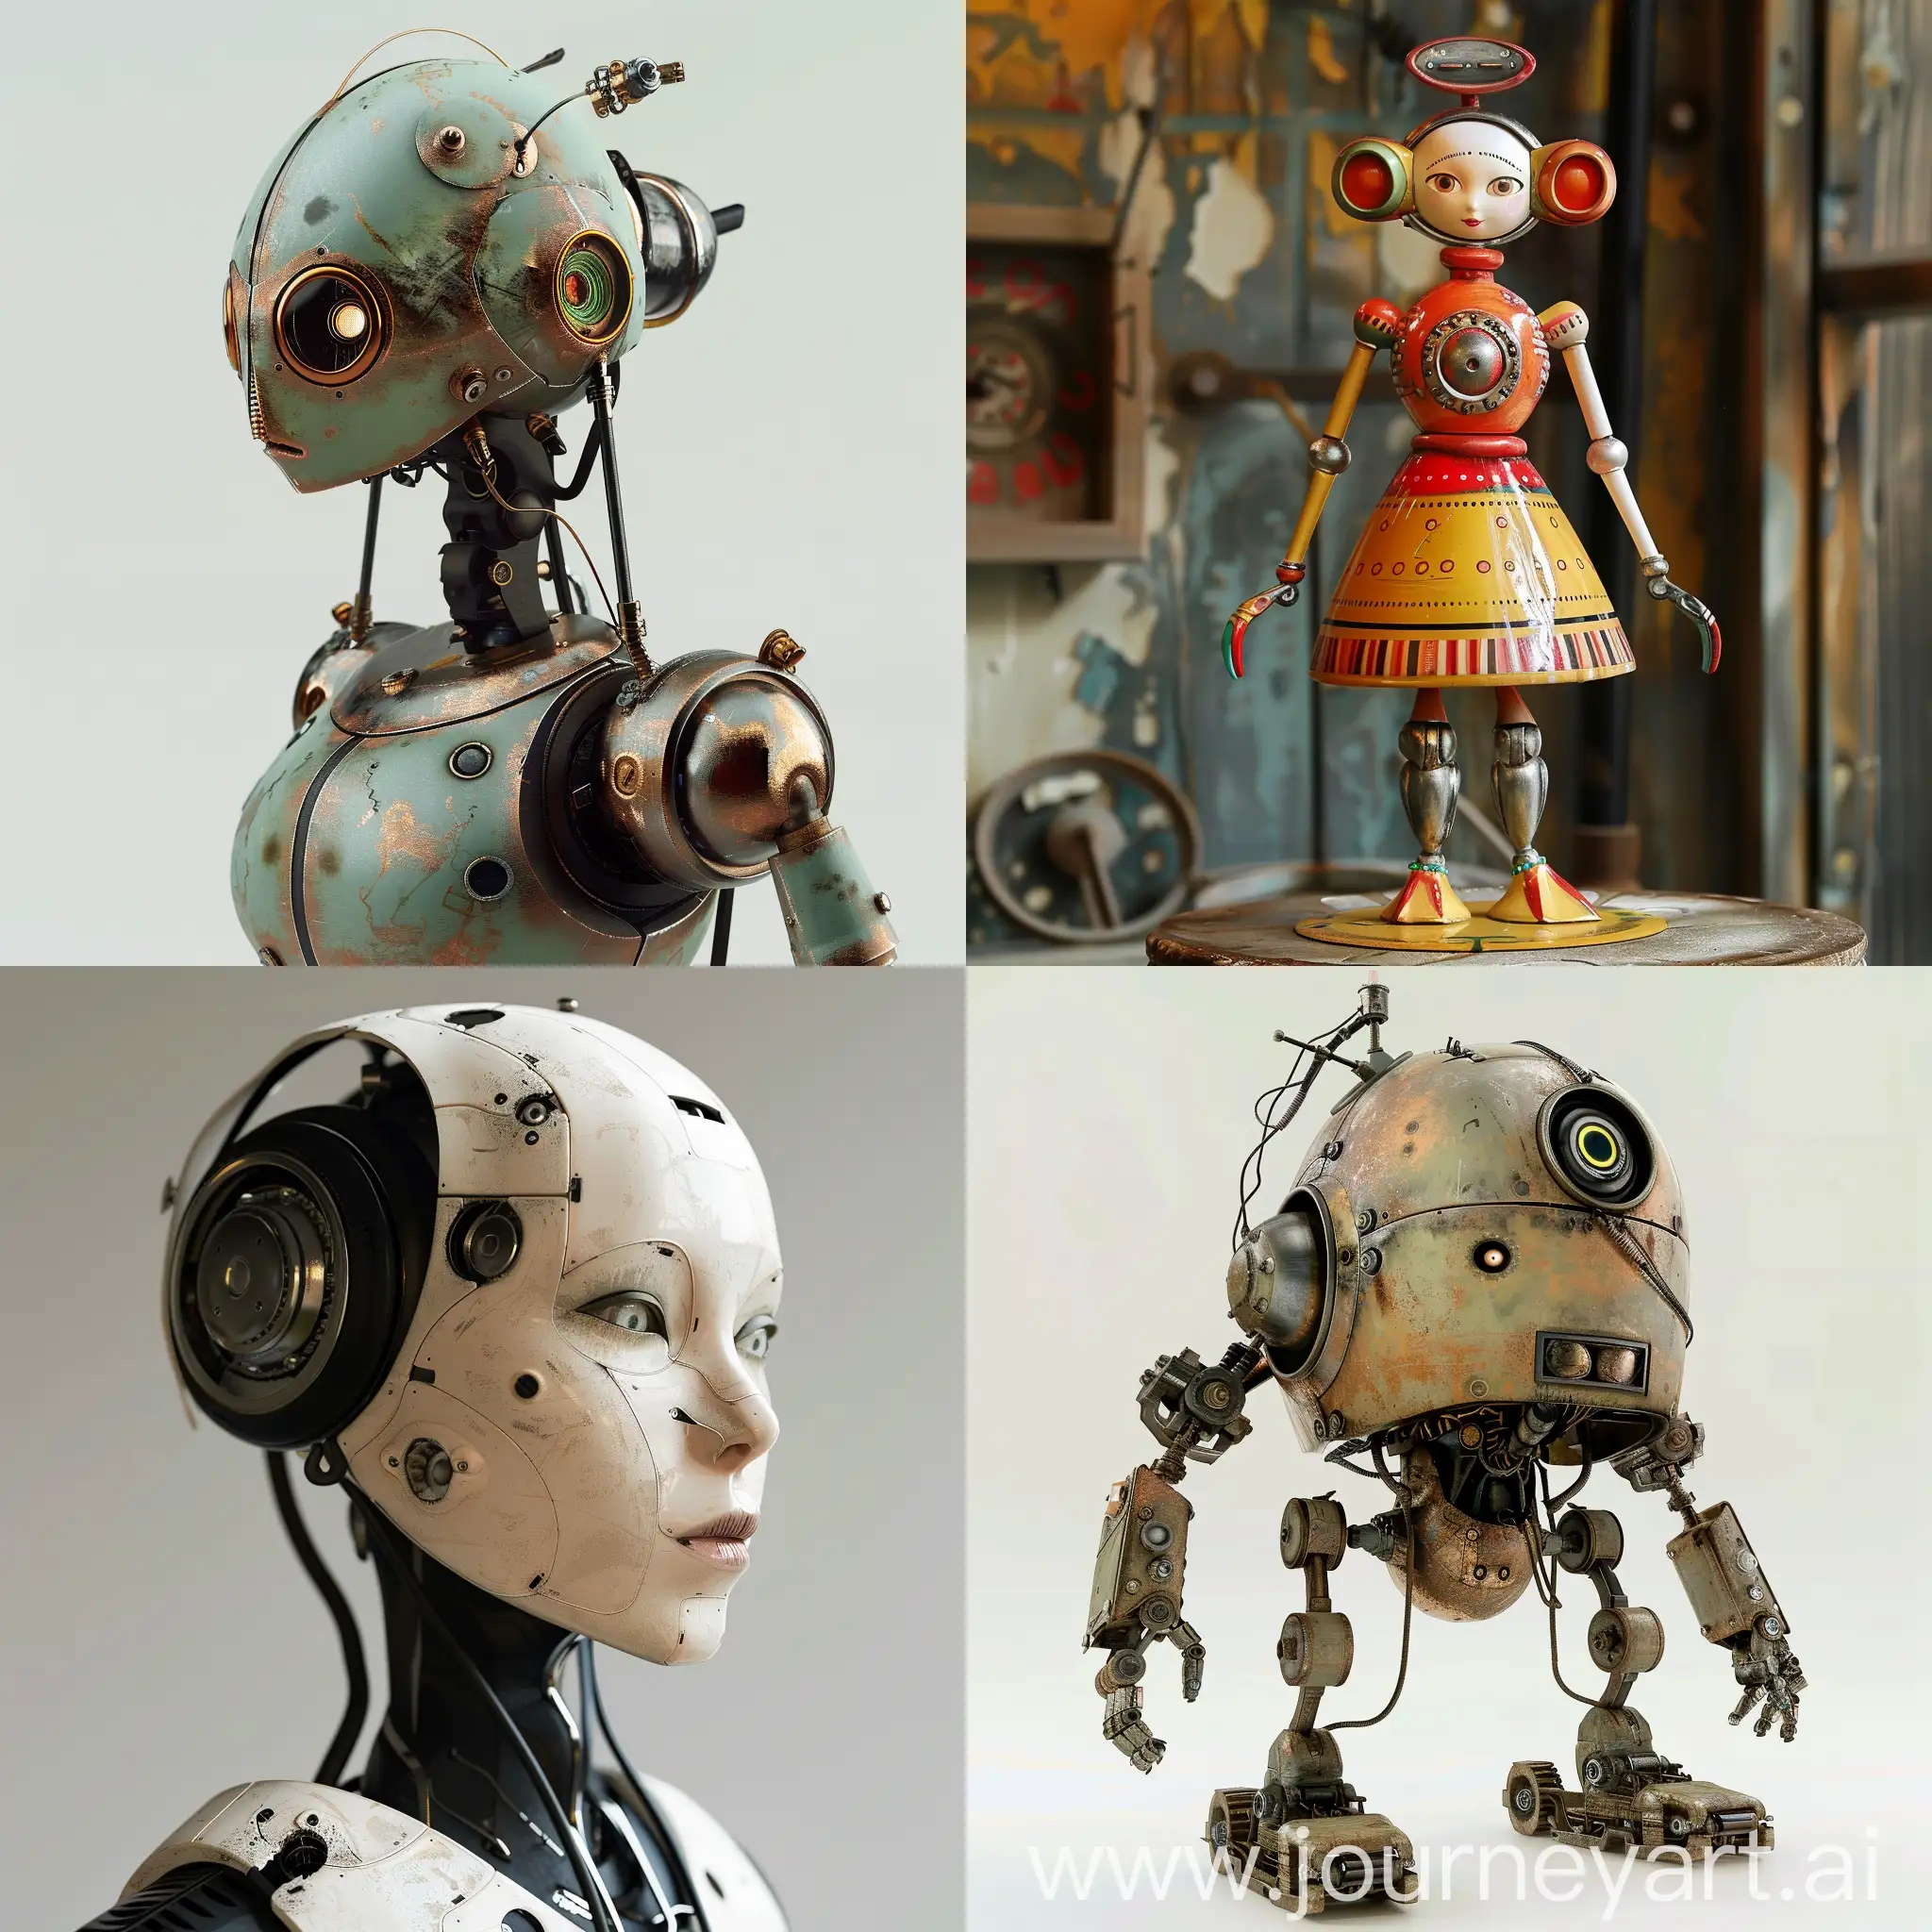 Futuristic-Female-Robot-Portrait-with-Advanced-Features